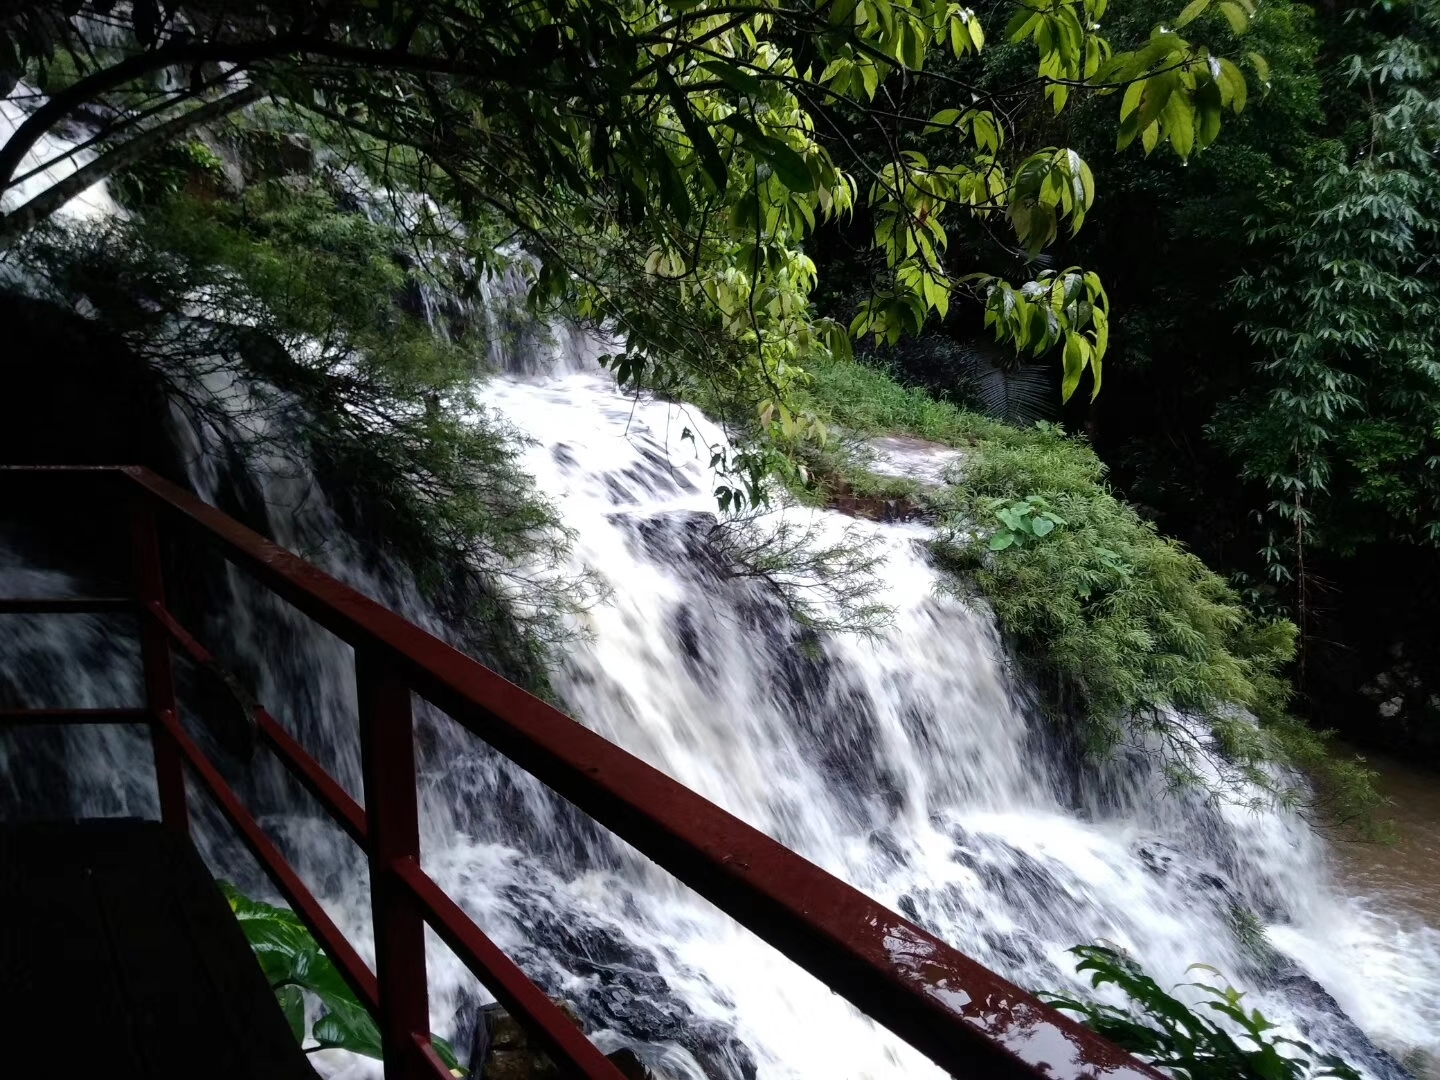 Yanoda Tropical Rainforest Scenic Area